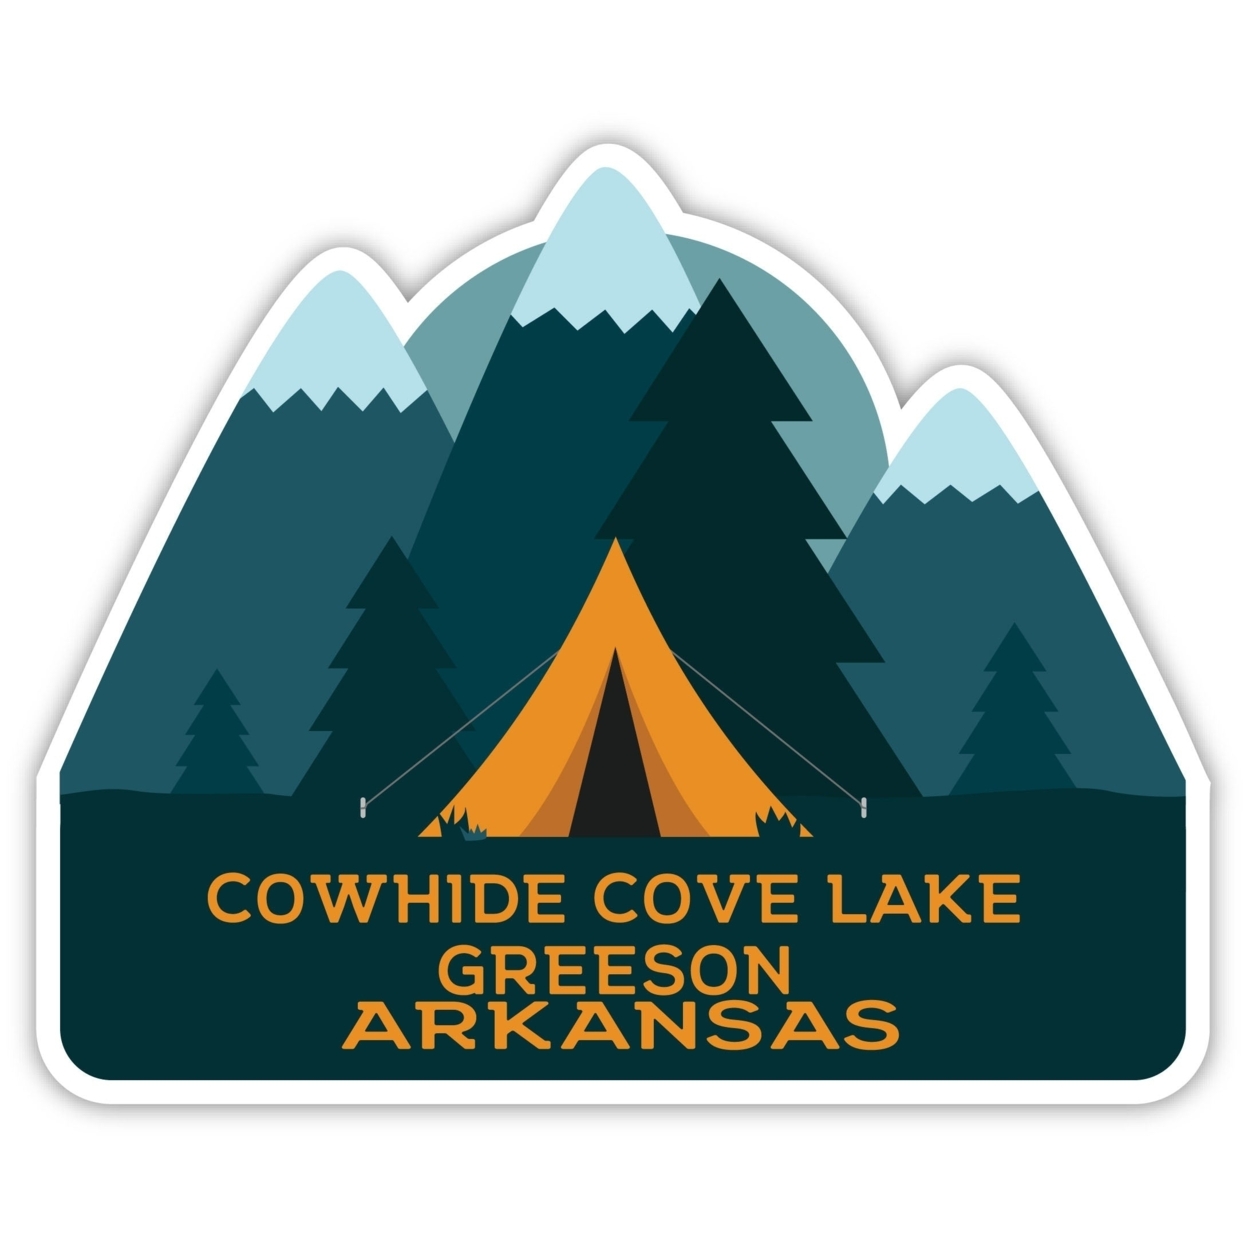 Cowhide Cove Lake Greeson Arkansas Souvenir Decorative Stickers (Choose Theme And Size) - Single Unit, 10-Inch, Tent